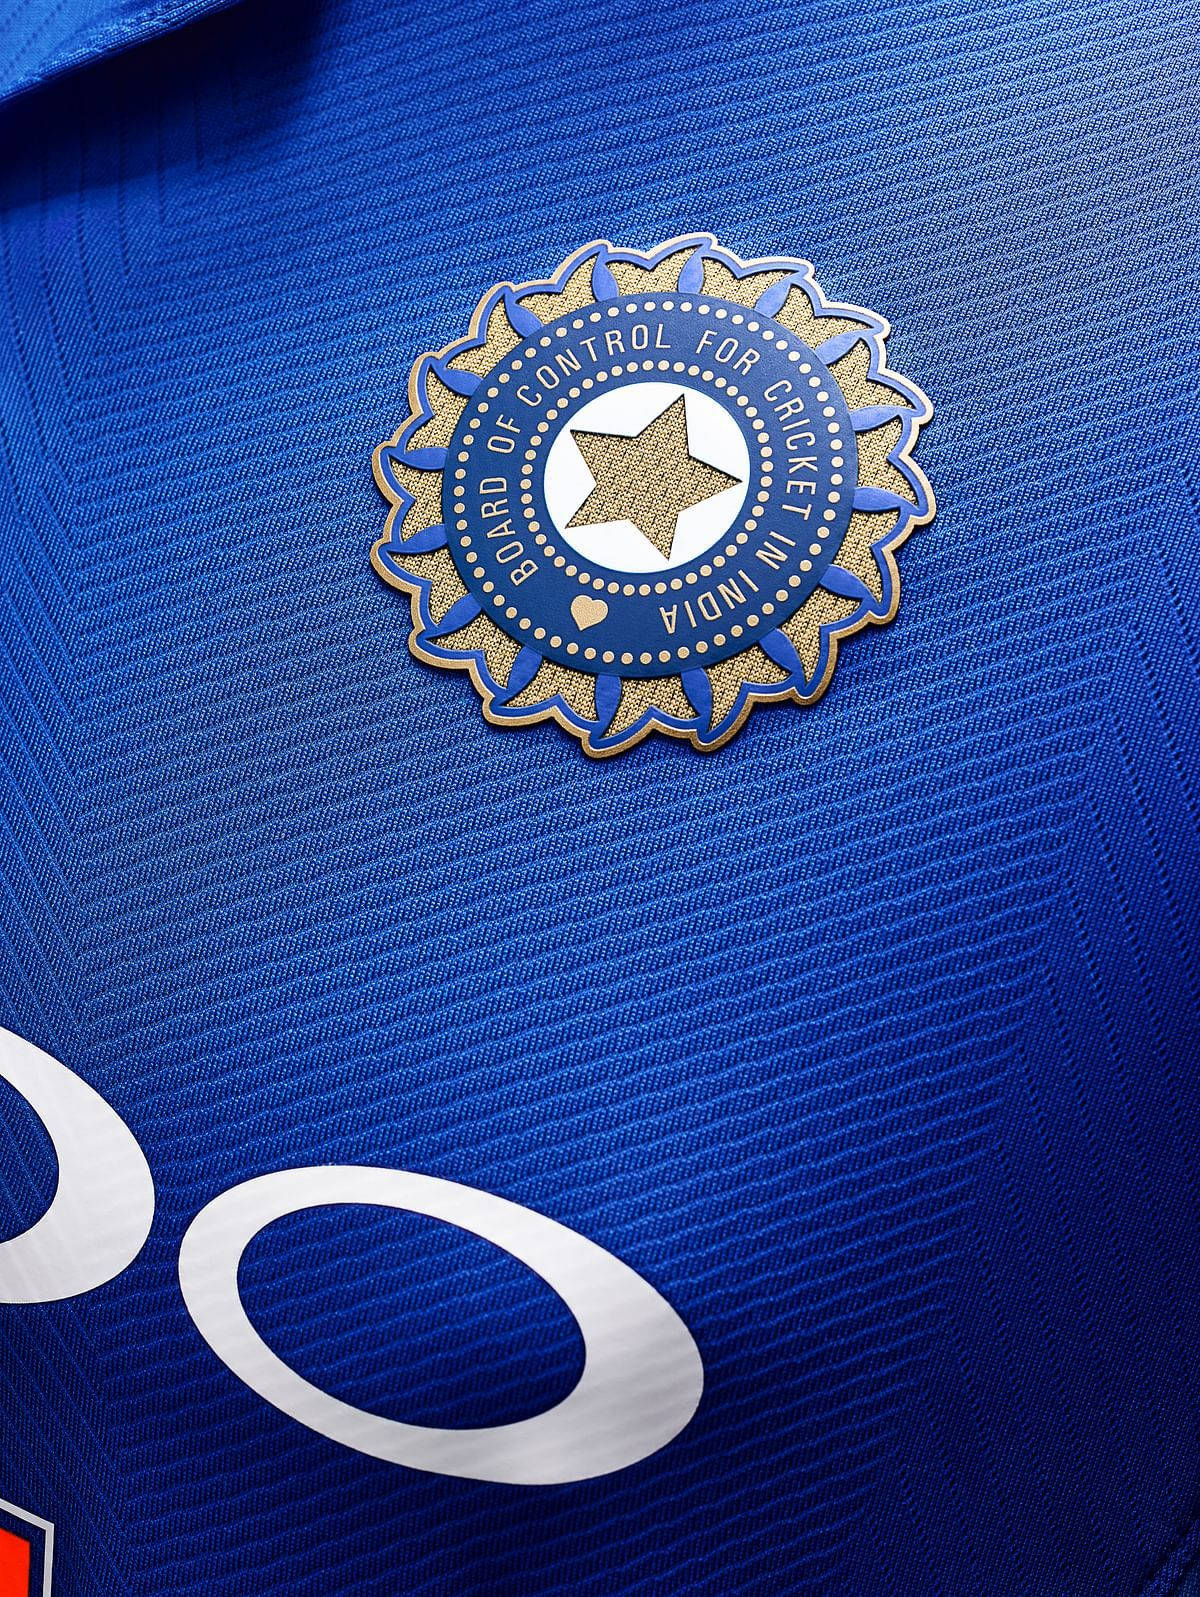 Indian Cricket Team Logo On Jersey Wallpaper